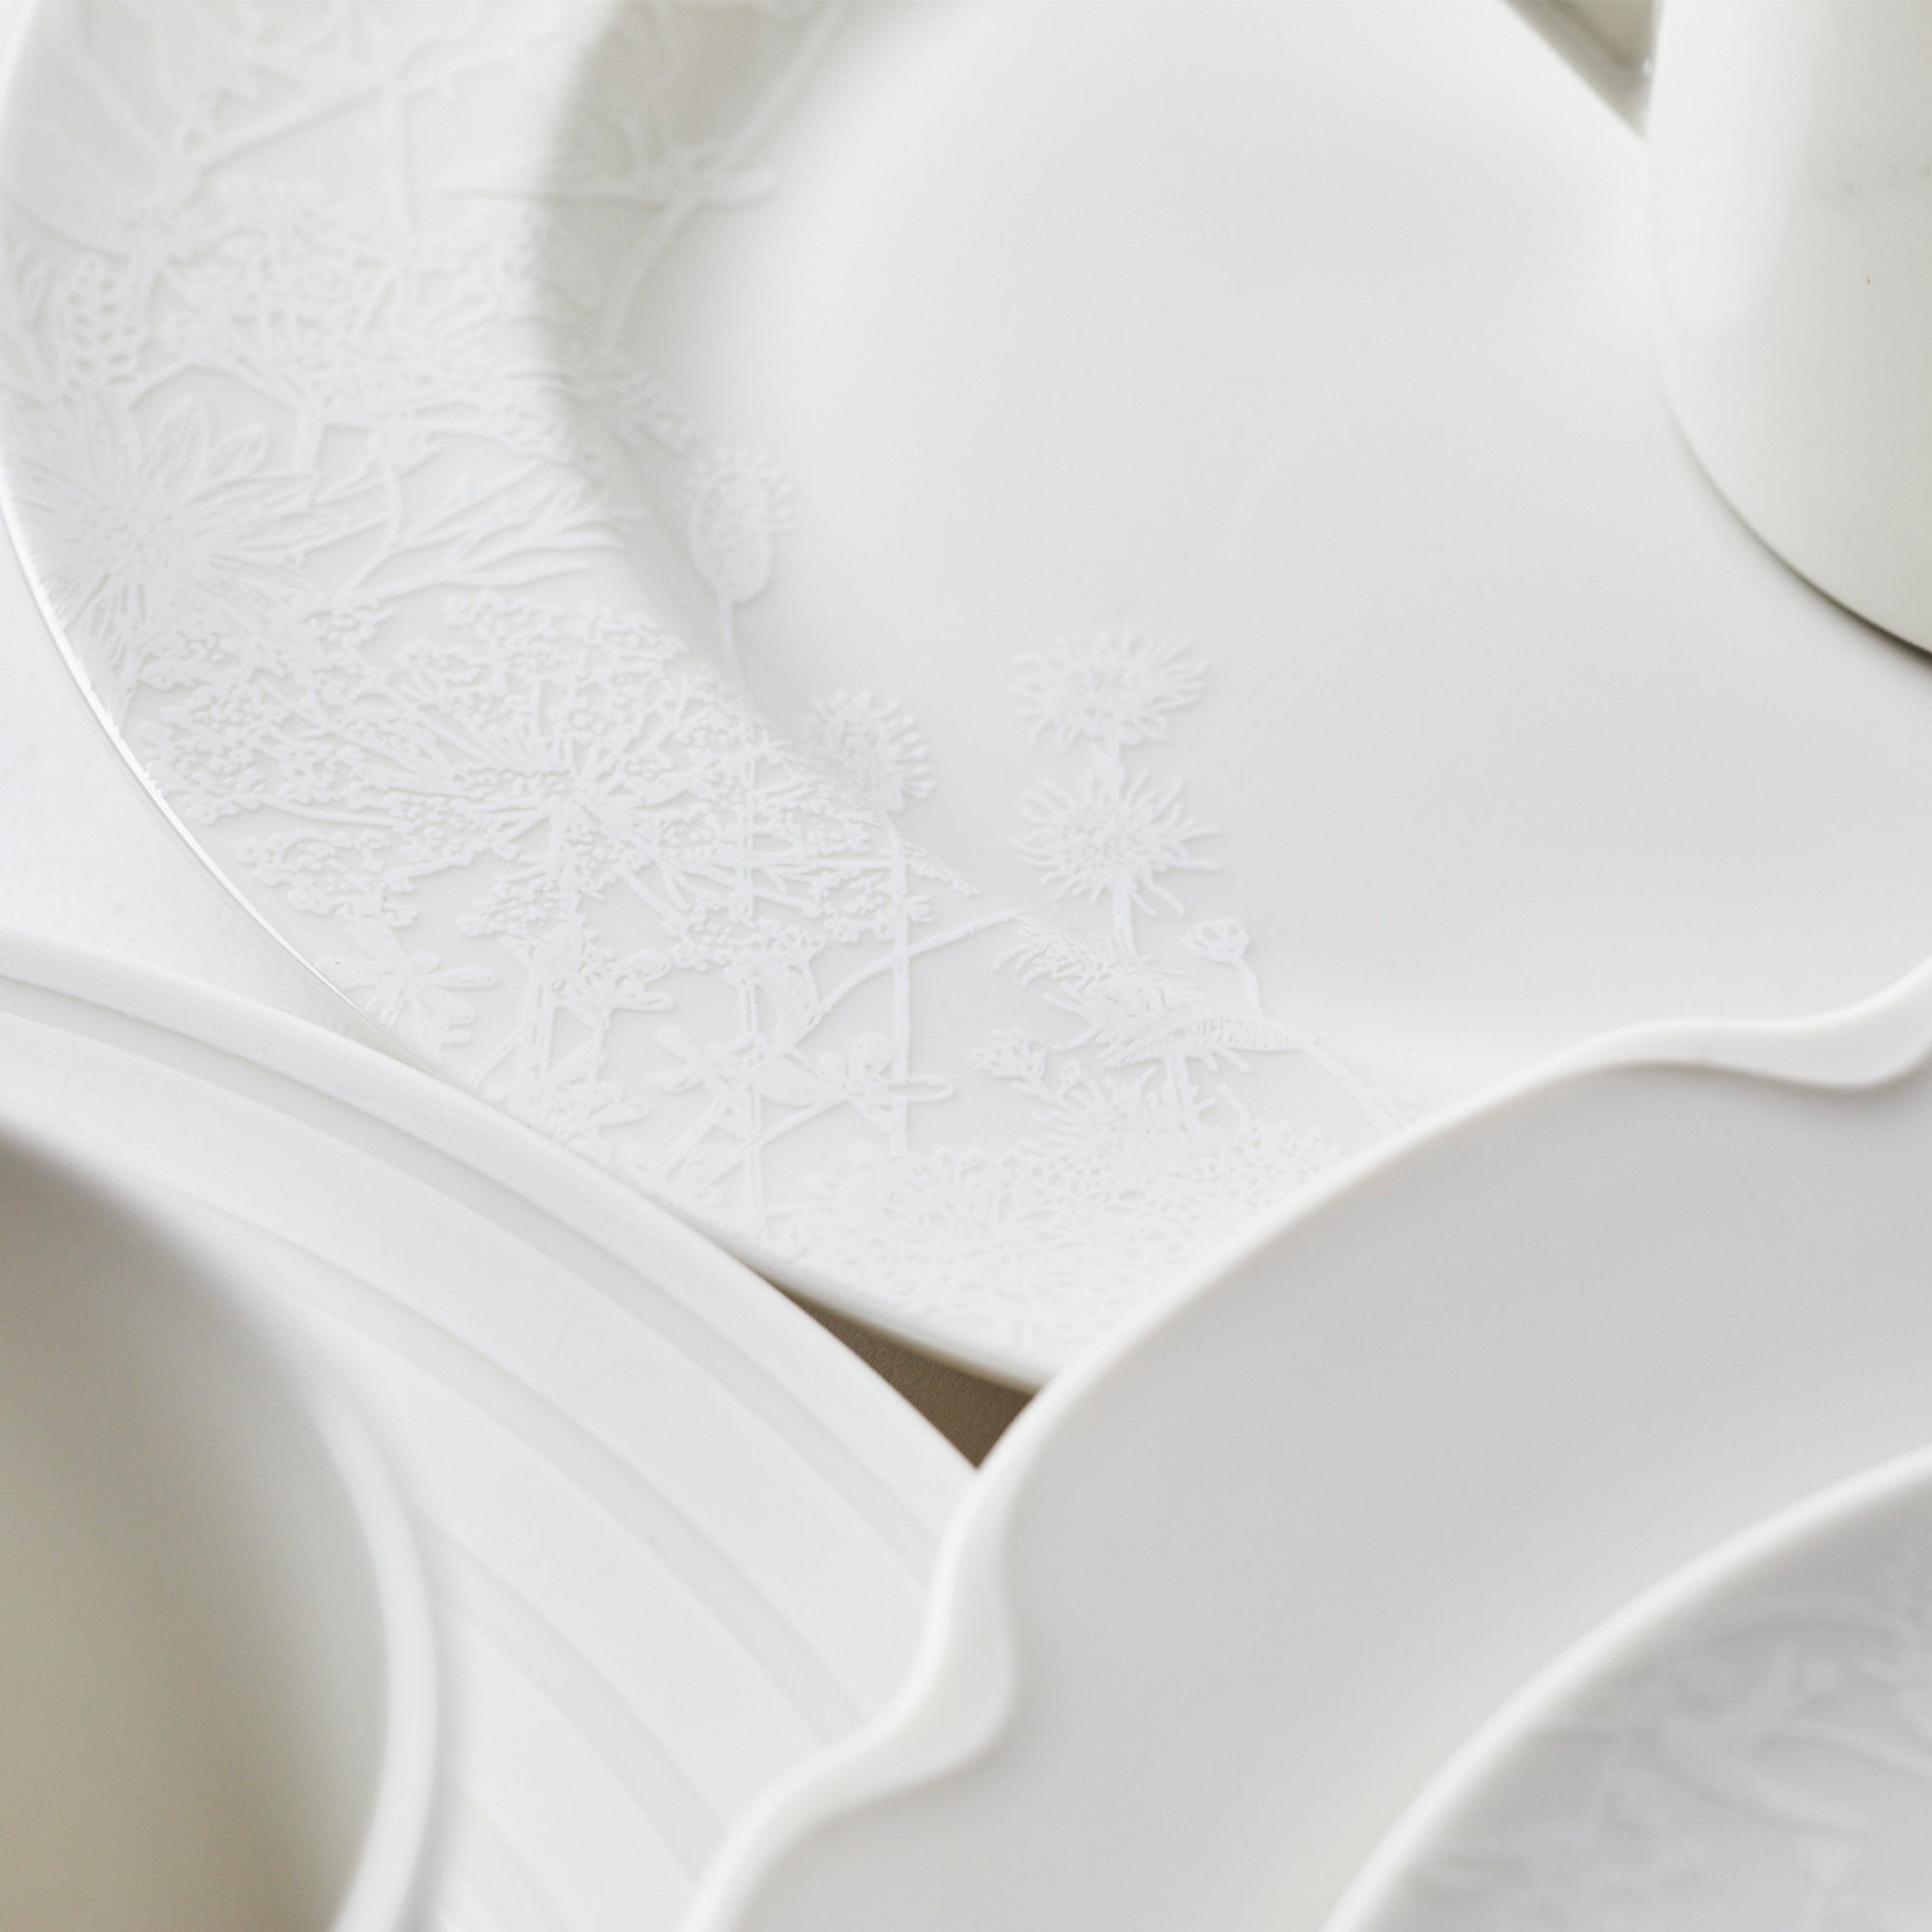 Elegant white porcelain dinnerware with embossed floral design.